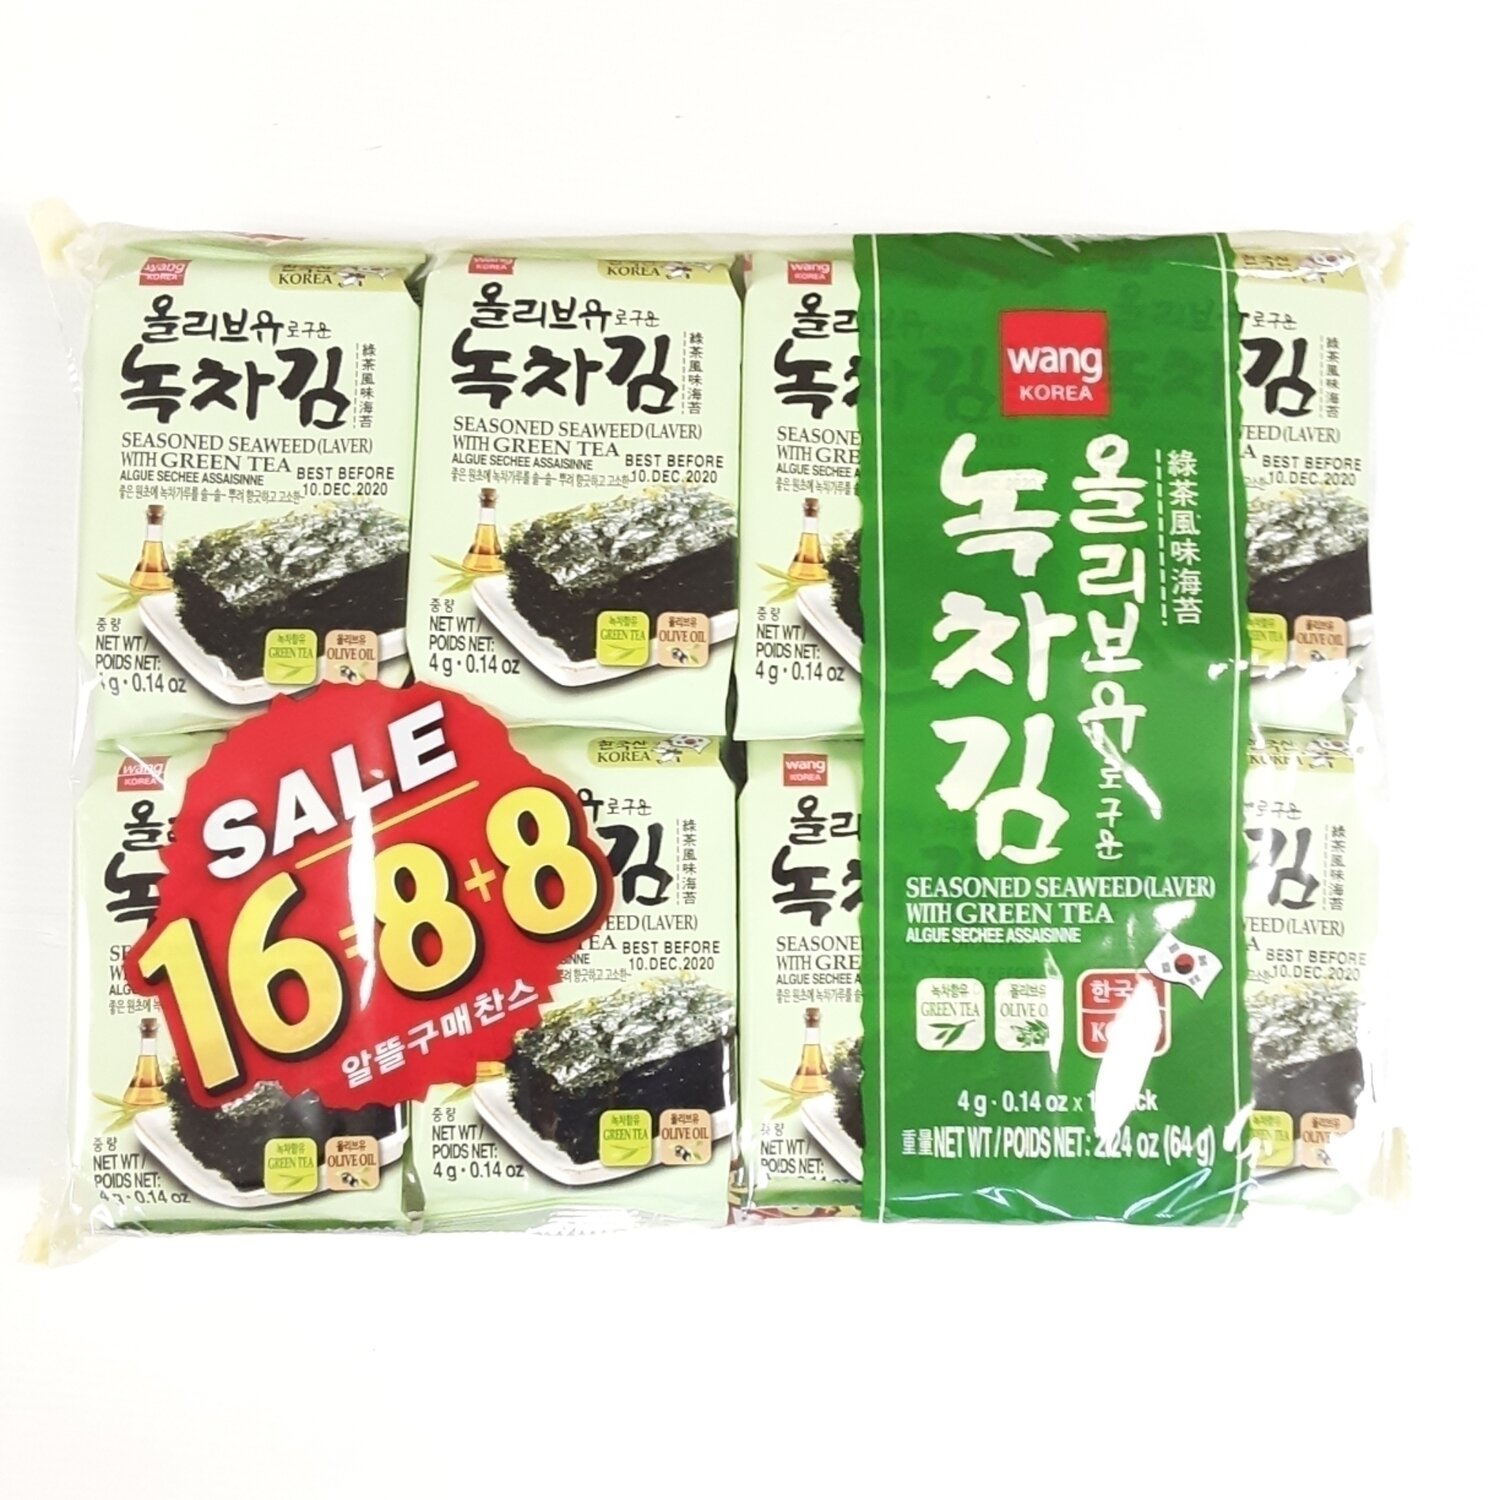 Wang  绿茶风味海苔 16Pk WANG KOREA seasoned Seaweed (LAVER) with Green Tea 64g (2.24 oz)